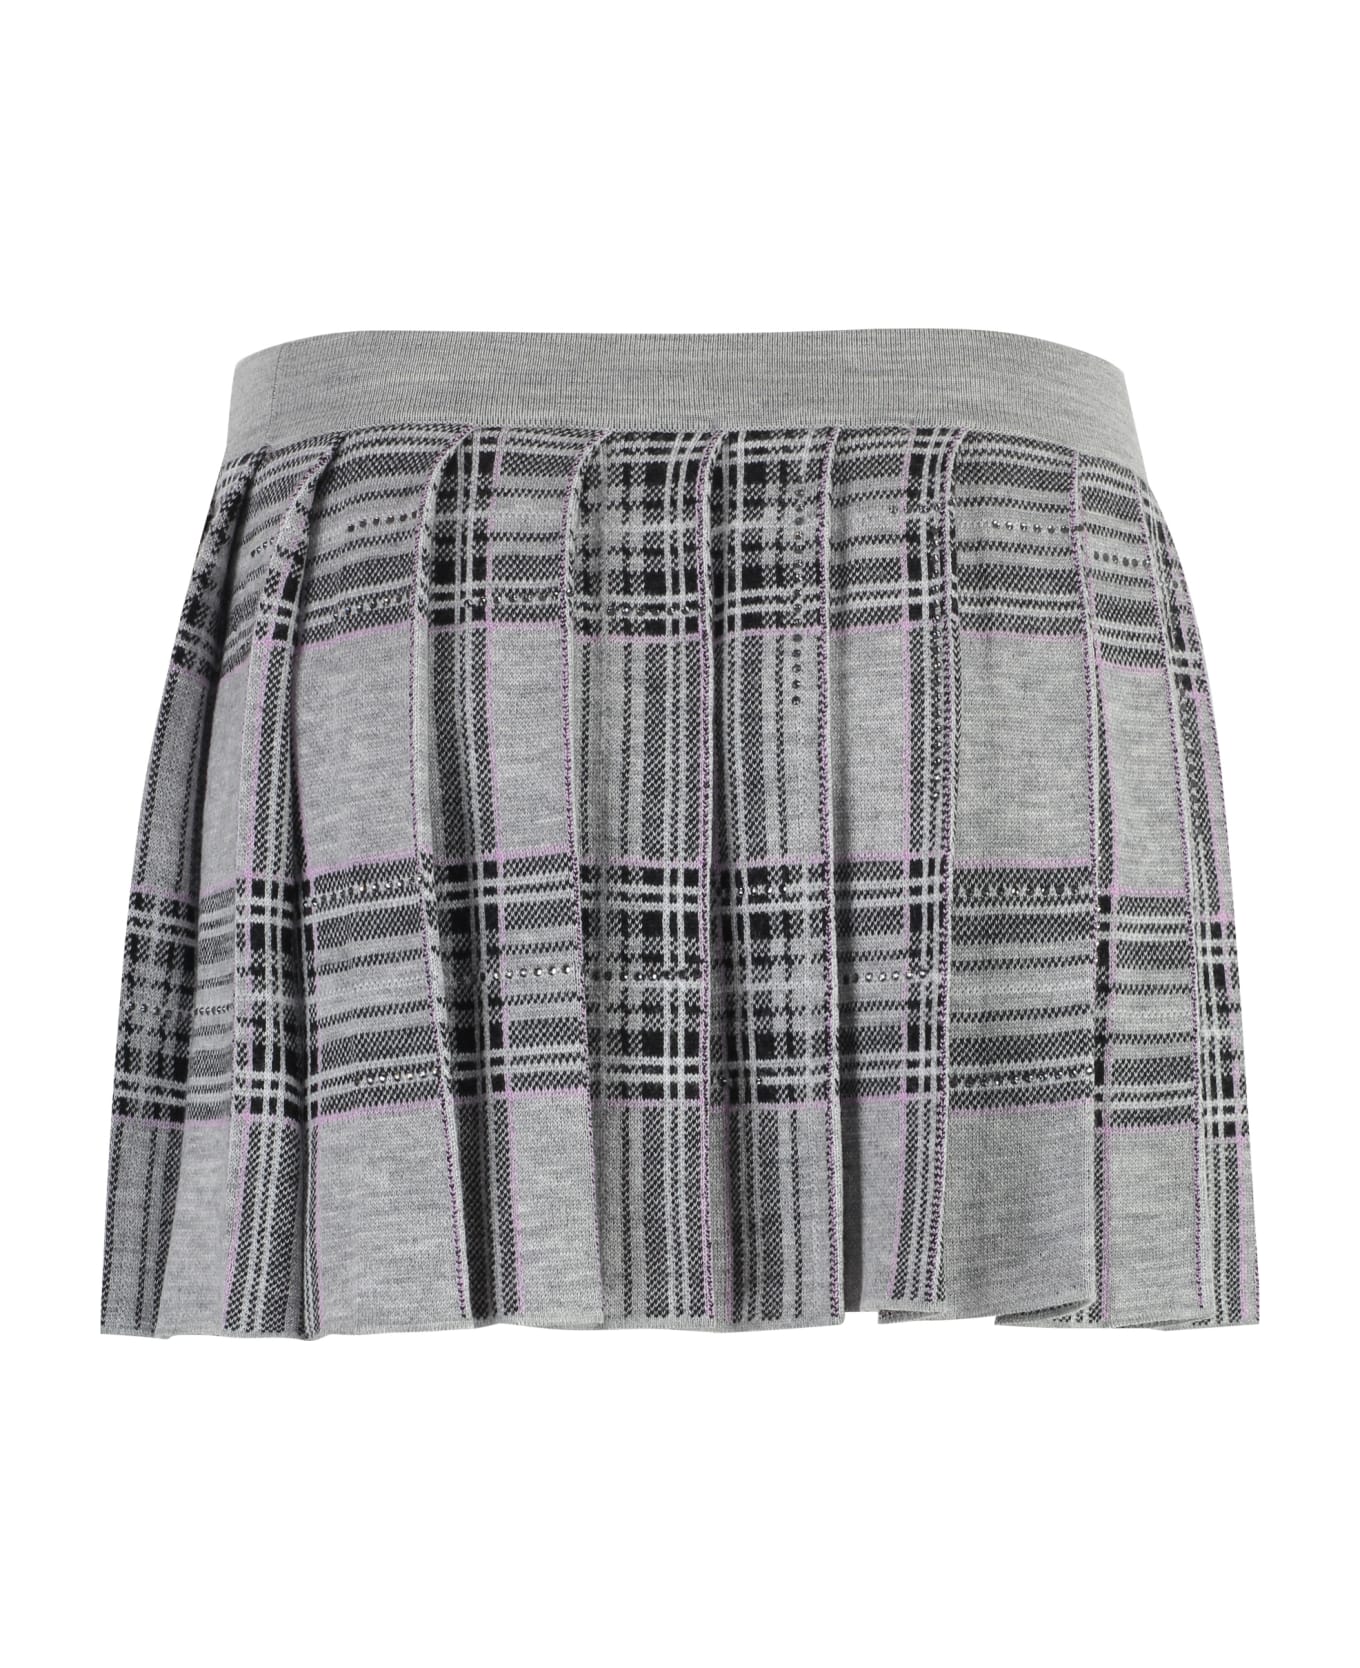 Giuseppe di Morabito Pleated Knitted Skirt - grey スカート